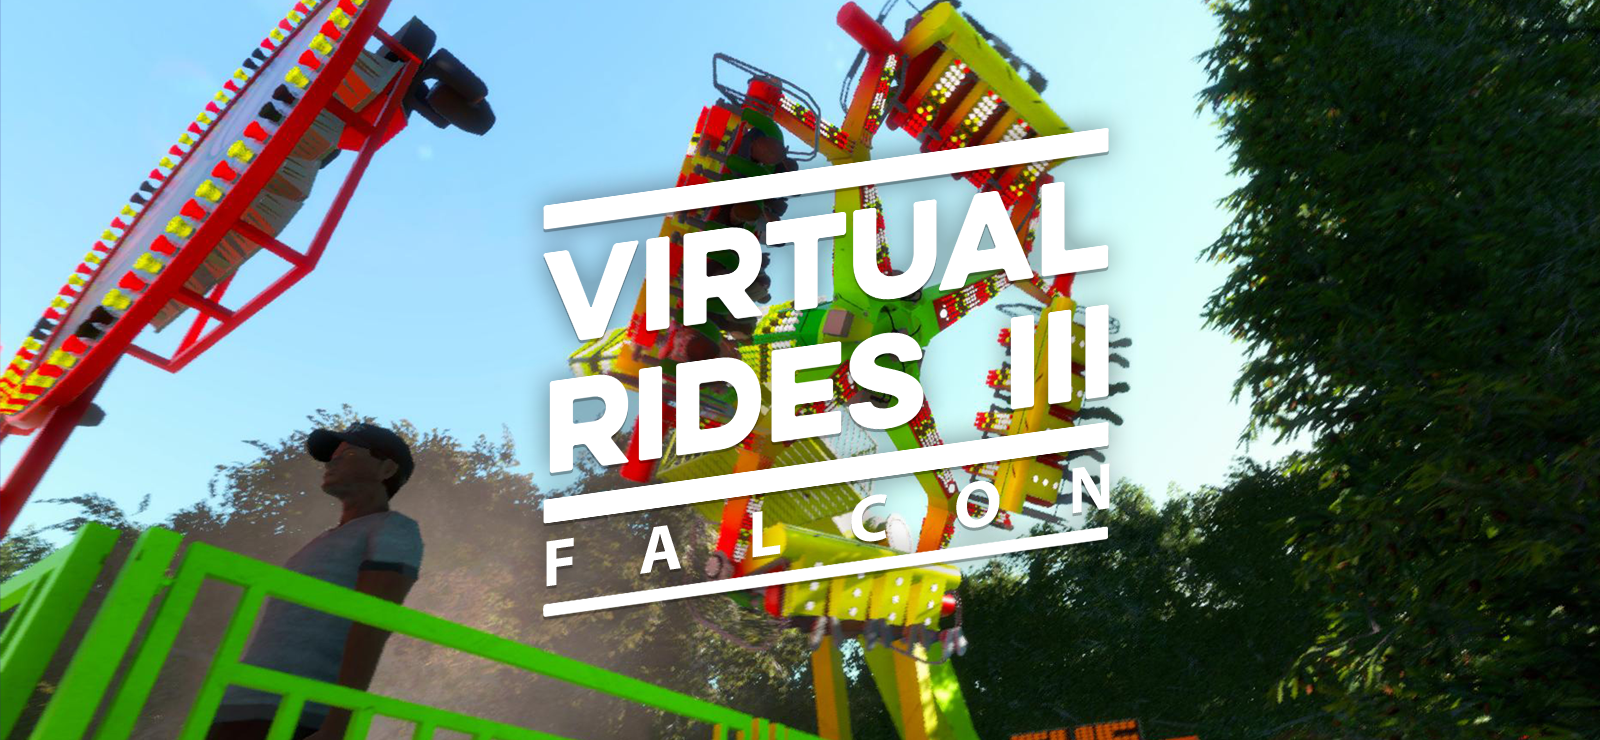 Virtual Rides 3 - The Falcon